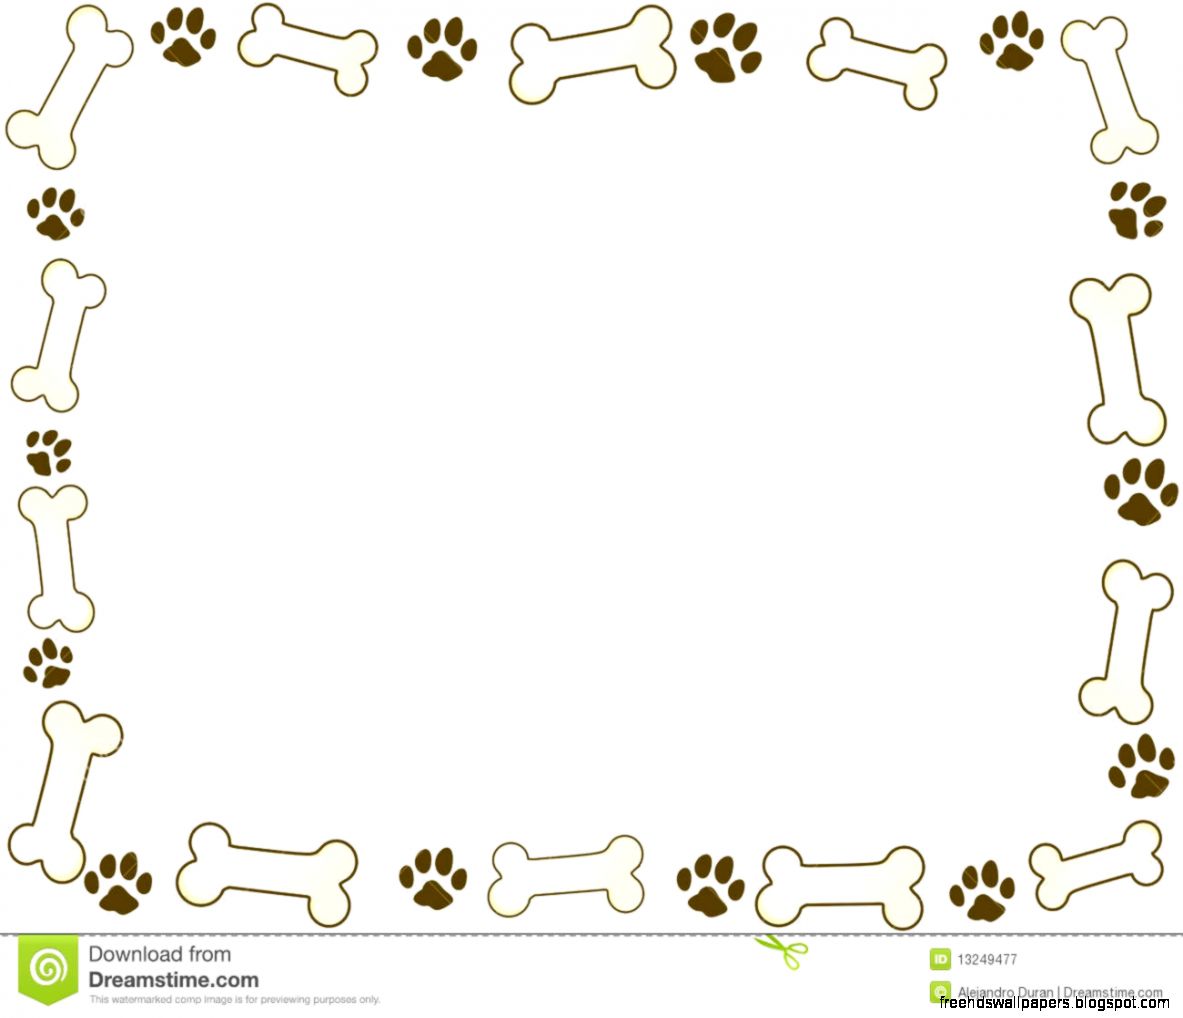 free clipart dog bone borders - photo #31